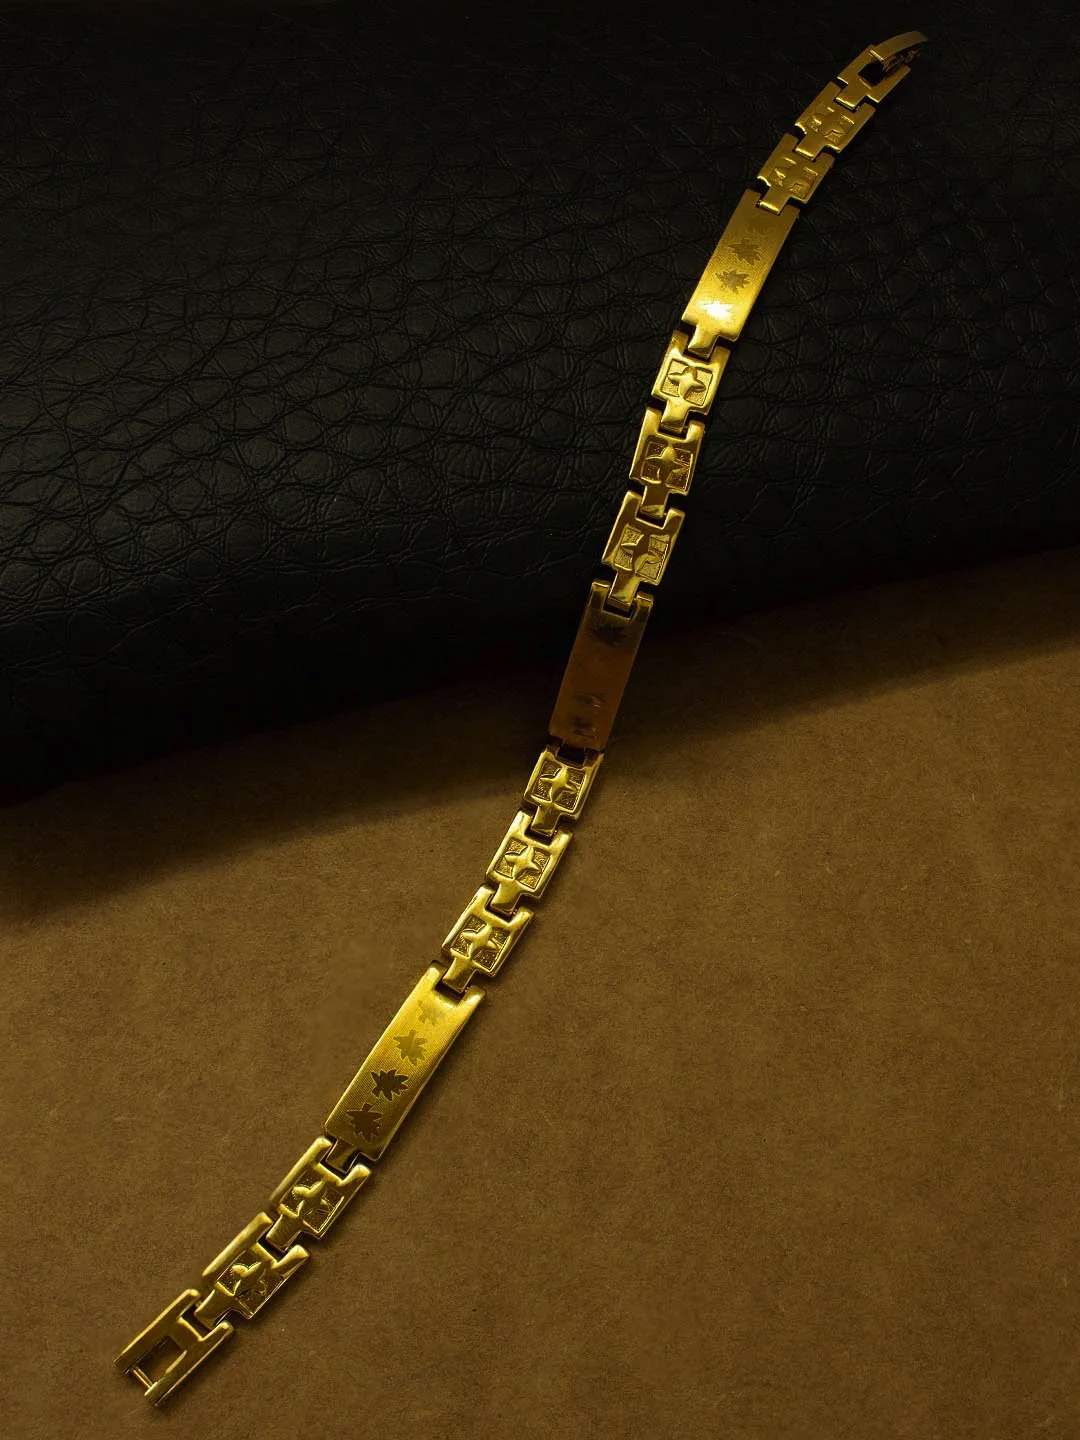 Gold Plated Geometric Design Mens Bracelet